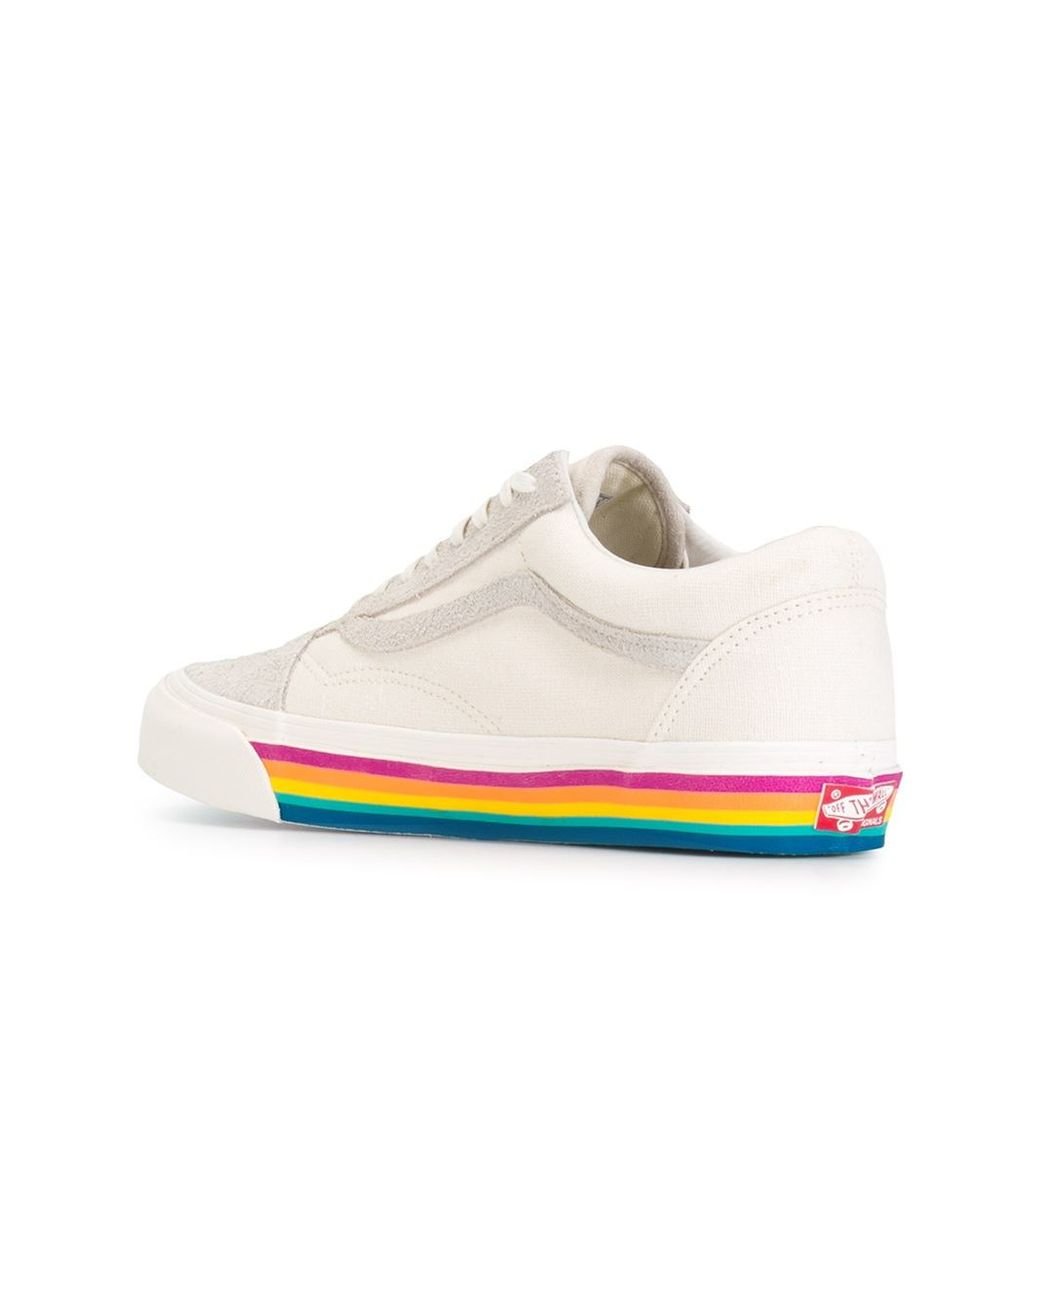 Vans Rainbow Sole Sneakers in Natural | Lyst